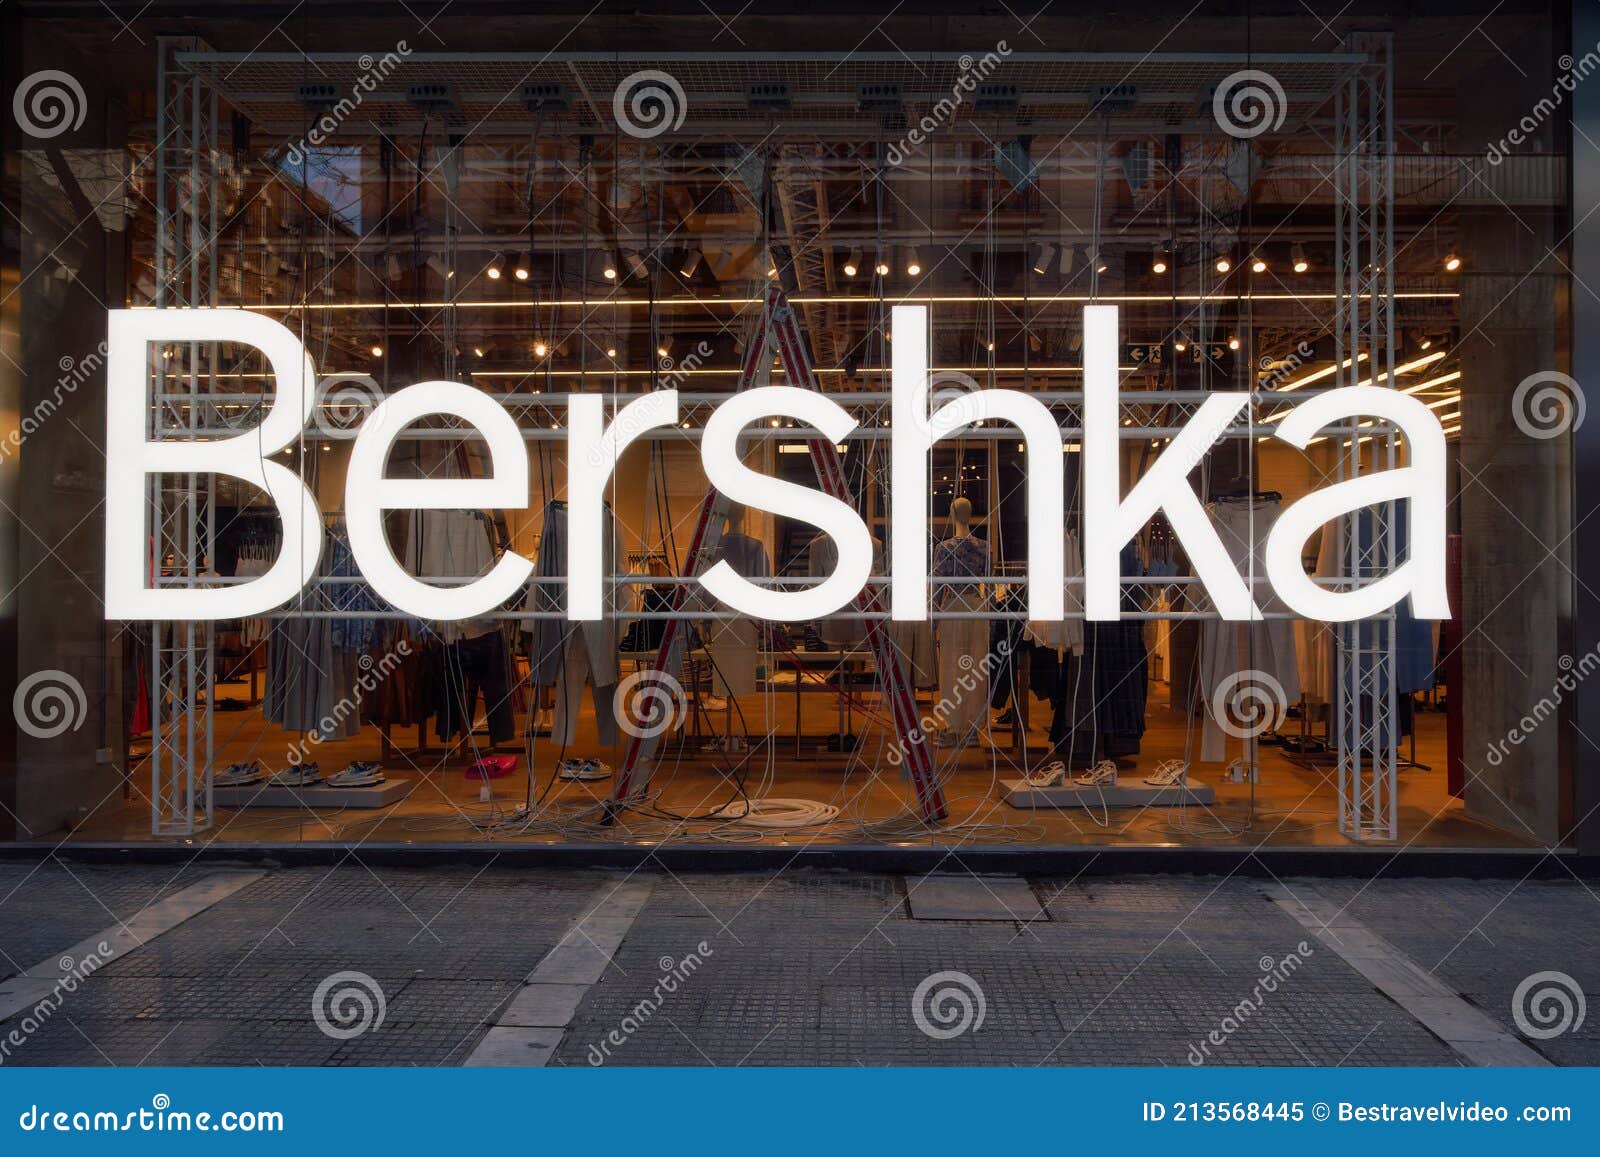 Bershka Retailer Store Exterior with Logo. Editorial Image - Image of ...